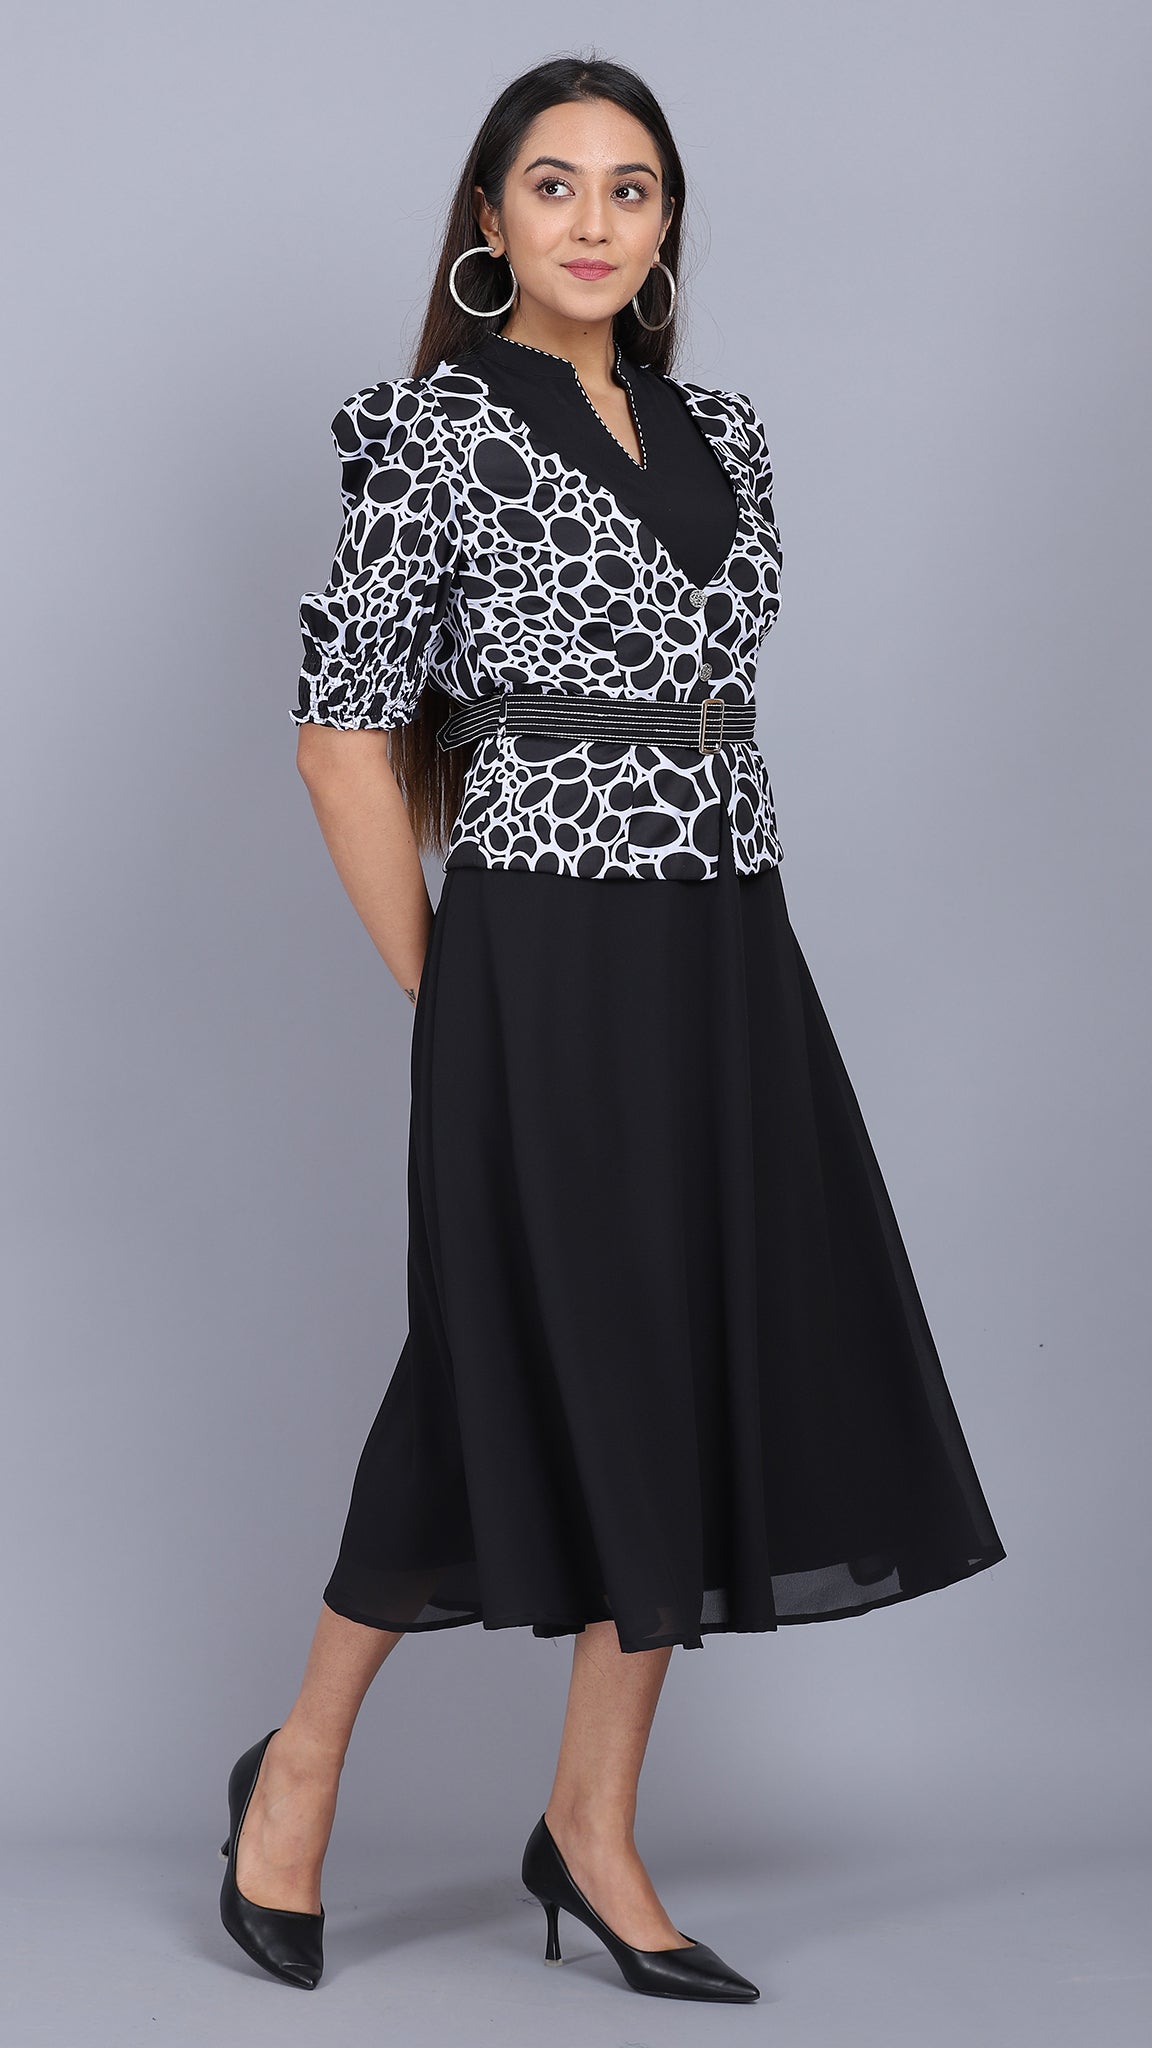 Black dress with geometrical printed Jacket 2 Pcs set